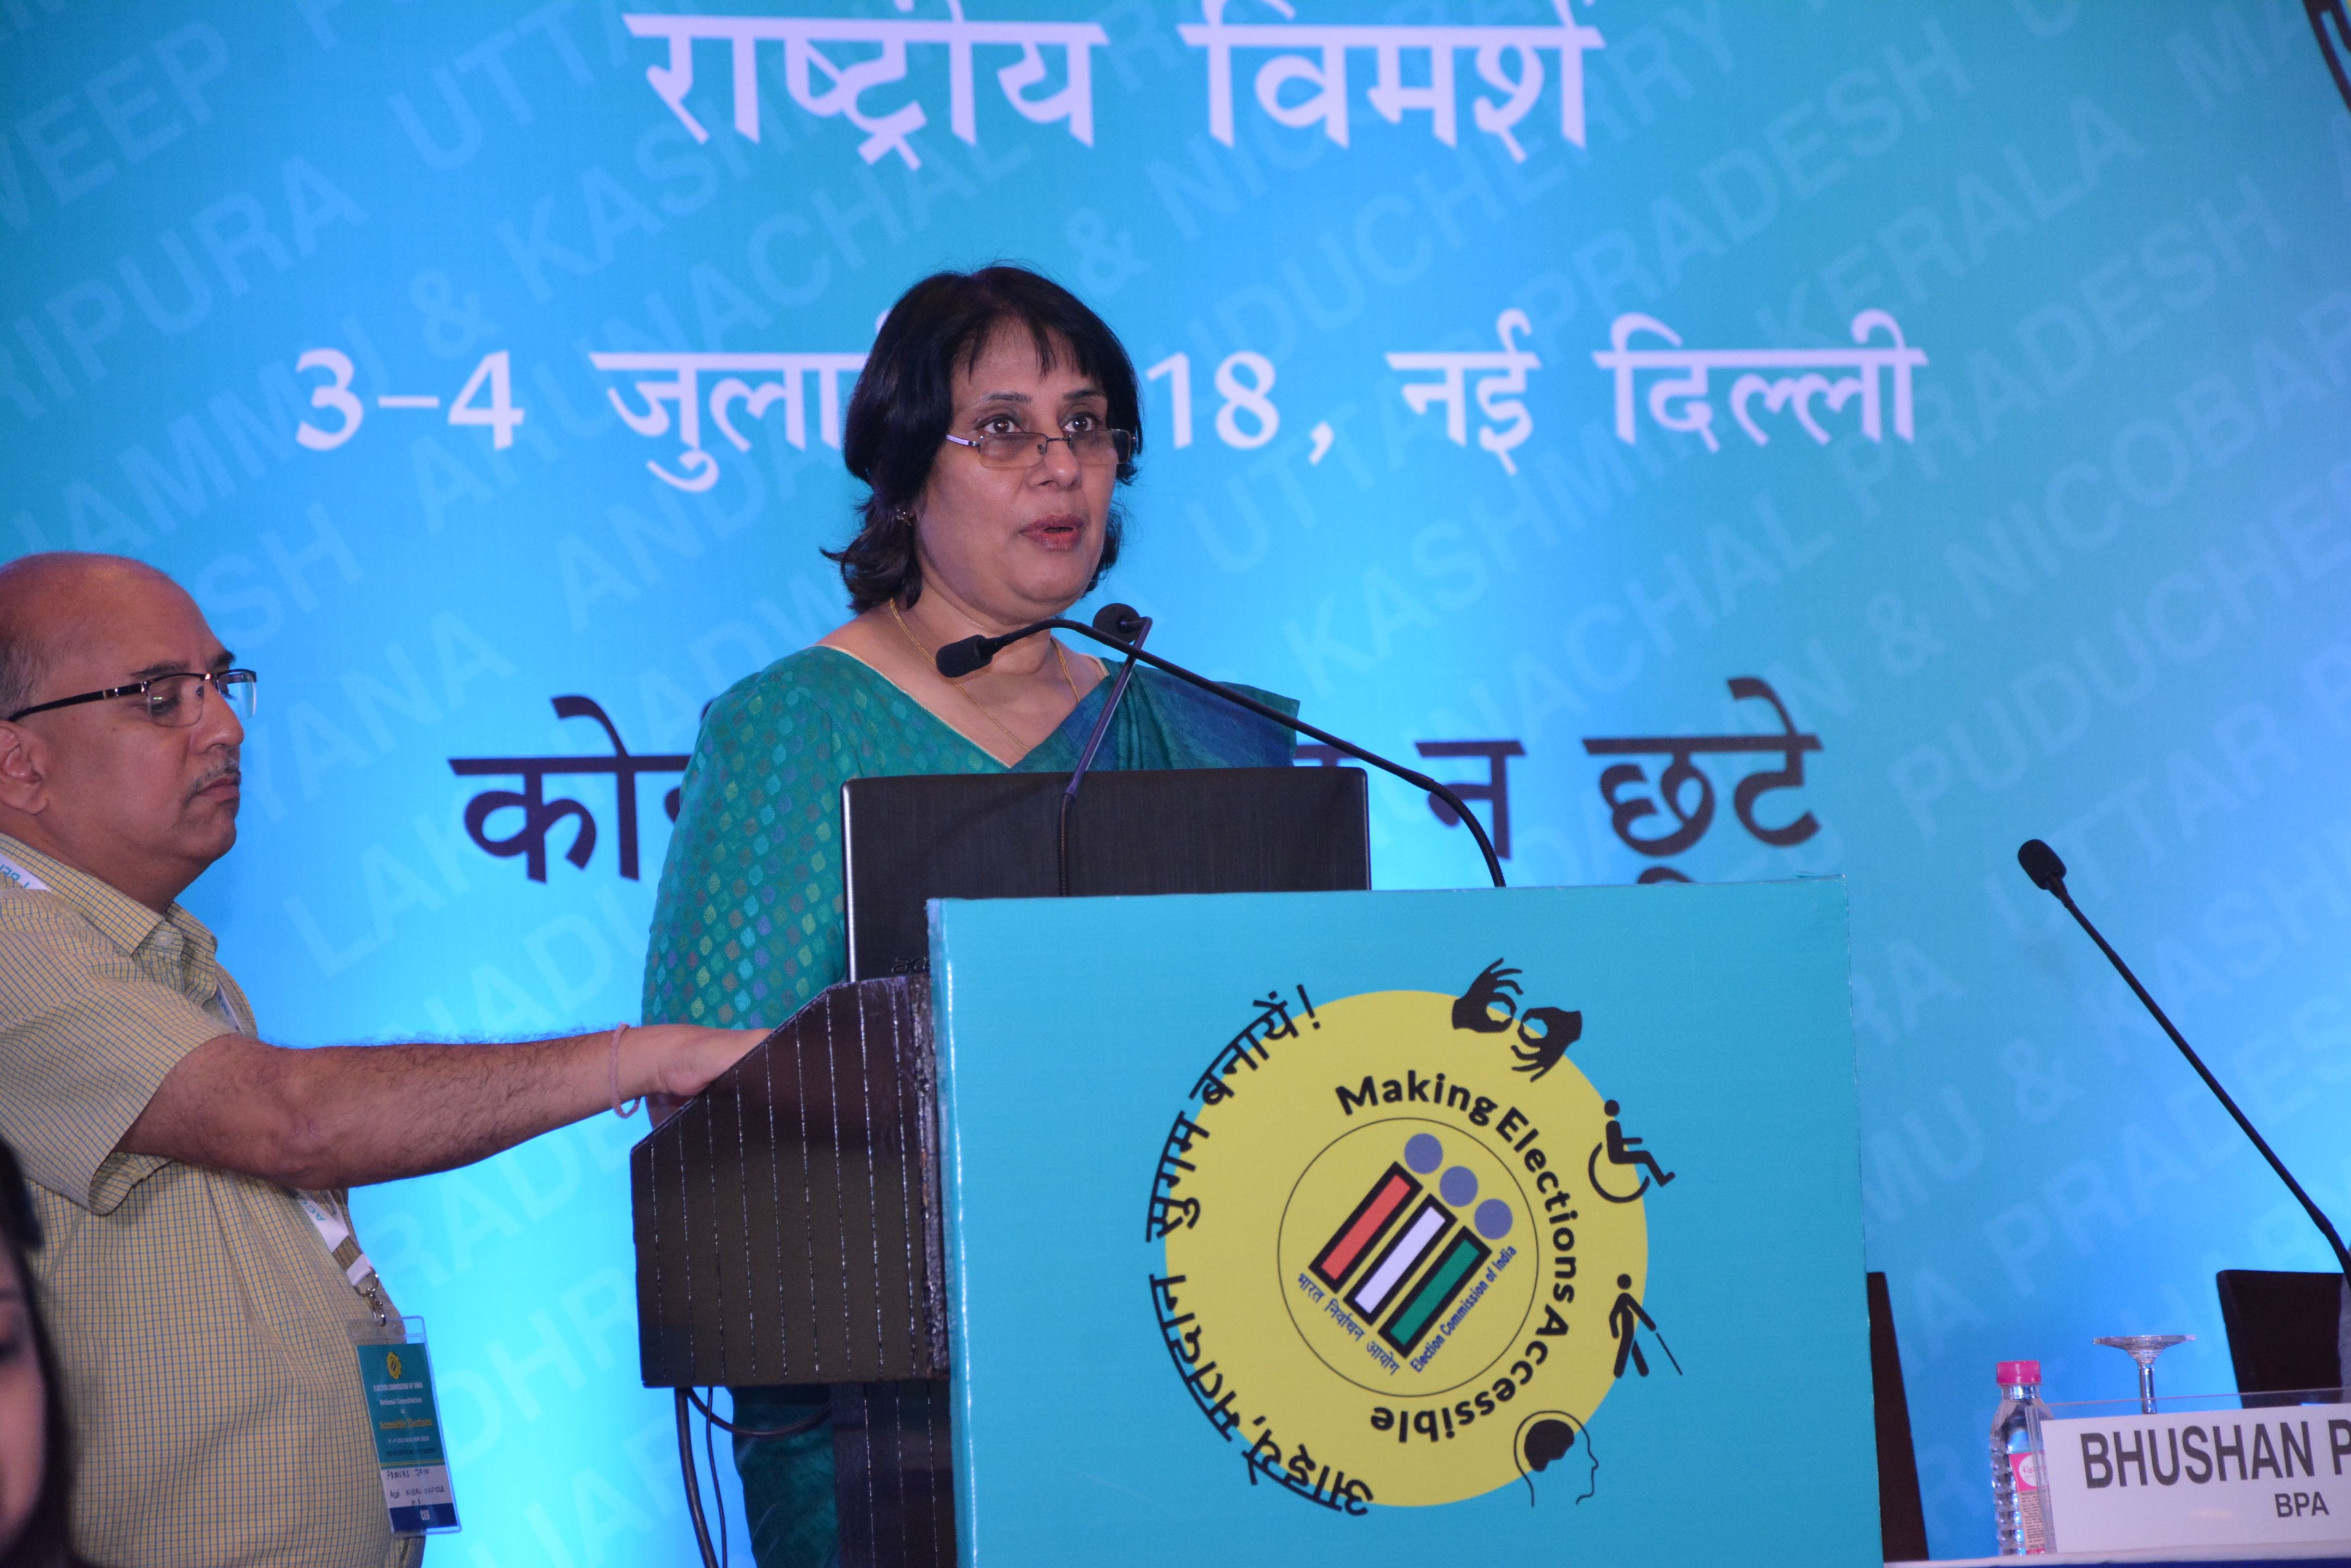 Day 2 - Ms. Saleena Singh, CEO Madhya Pradesh